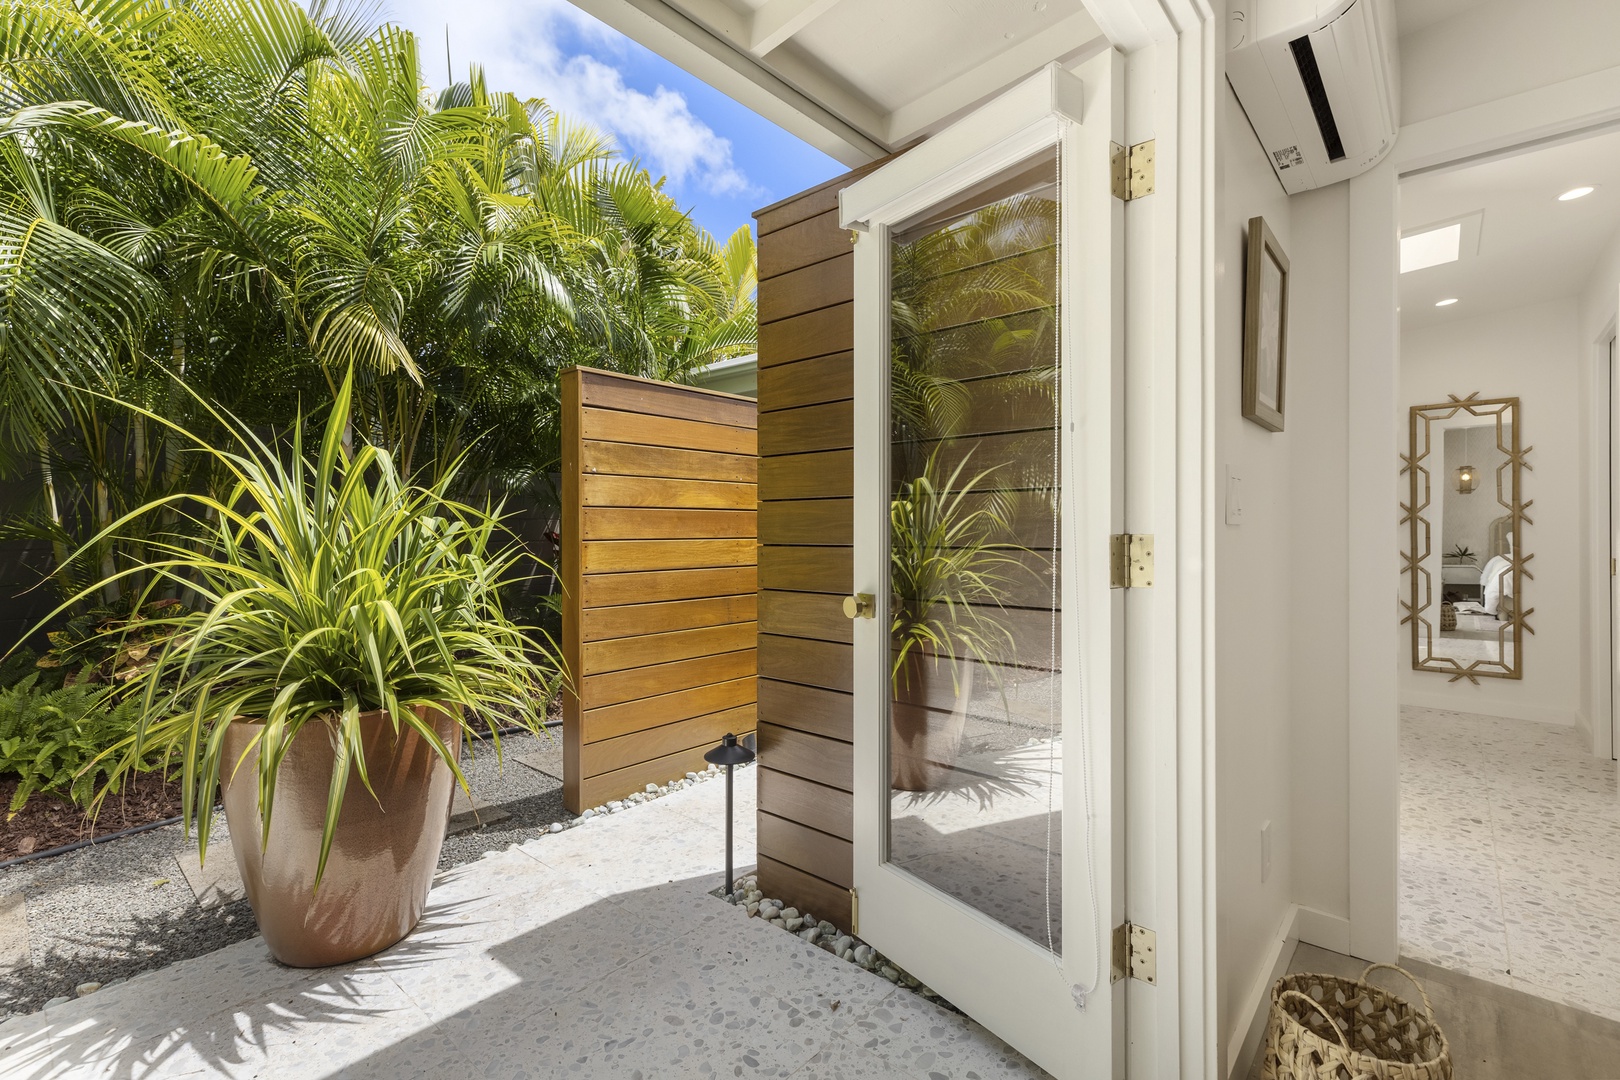 Kailua Vacation Rentals, Lanikai Hideaway - Primary ensuite bathroom open to private outdoor shower area